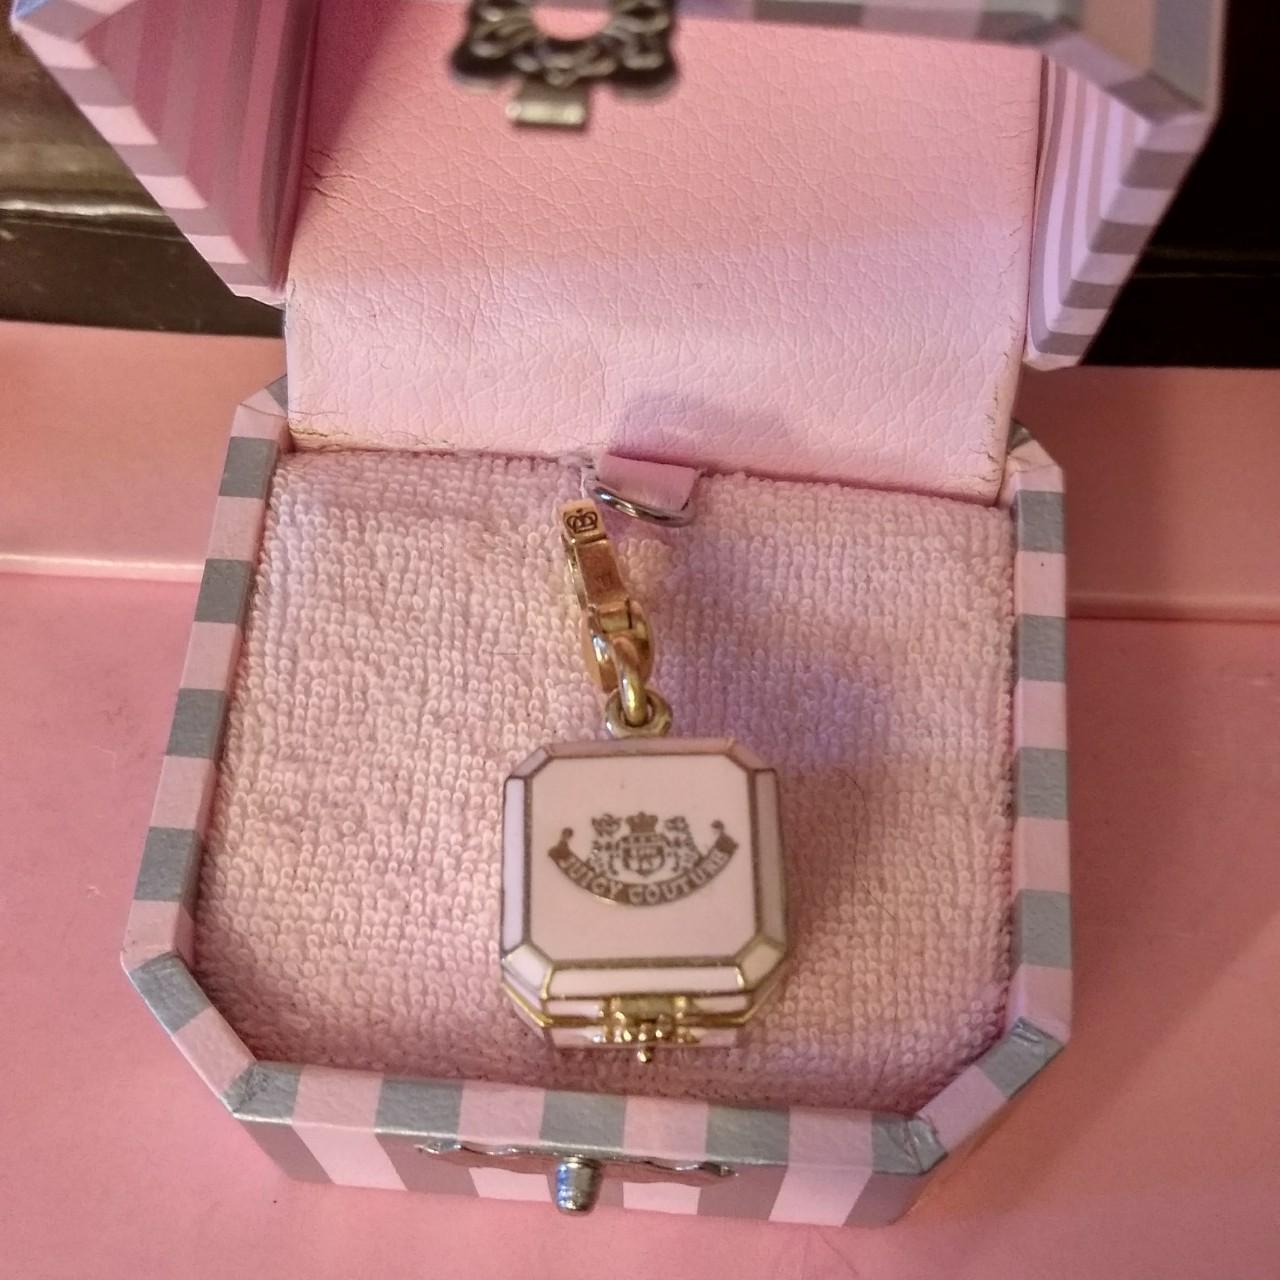 ☆Astronaut keychain/bag charm ☆Free shipping if - Depop